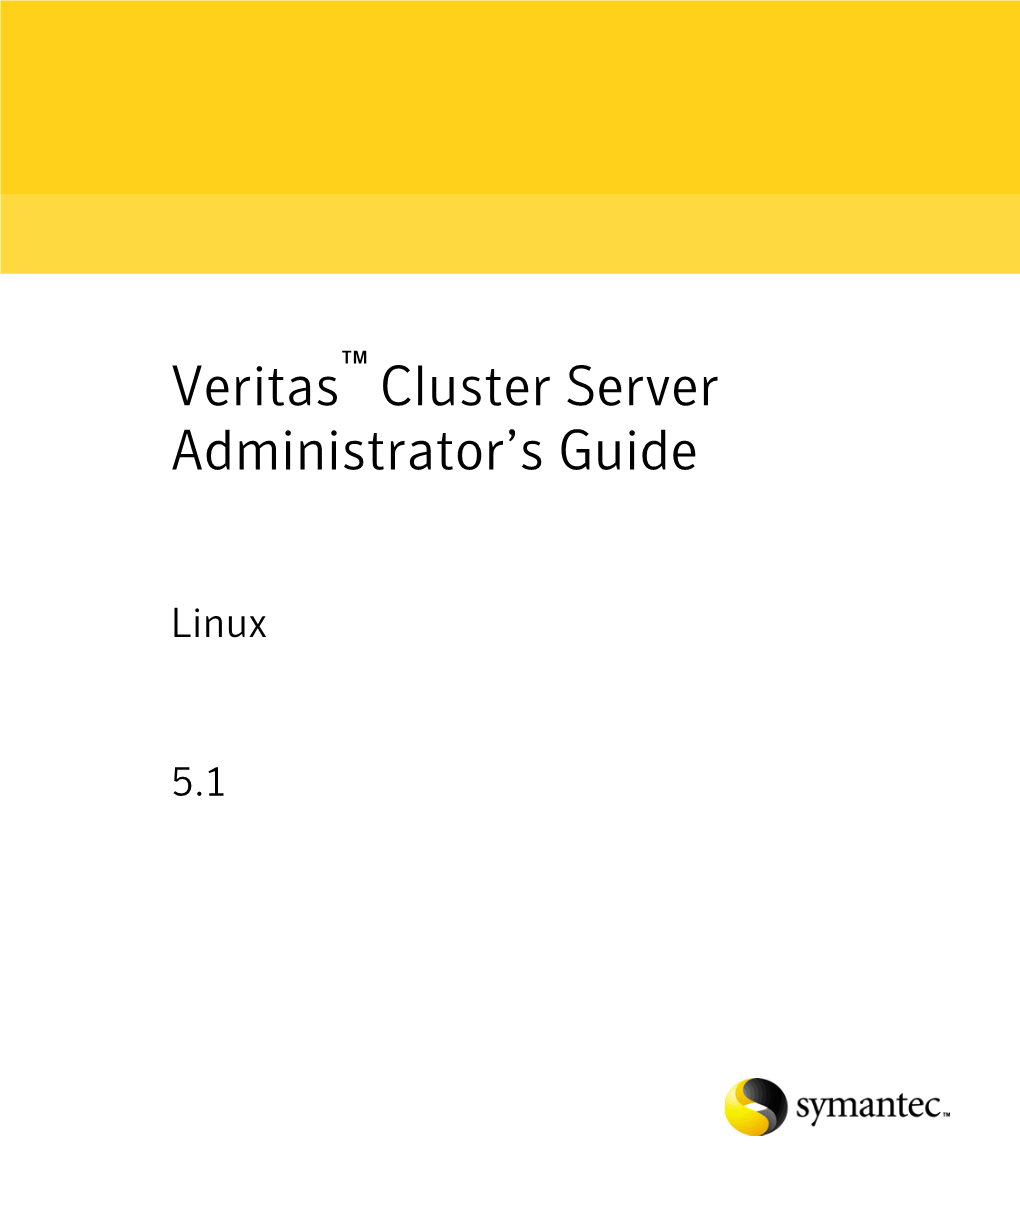 Veritas Cluster Server Administrator's Guide